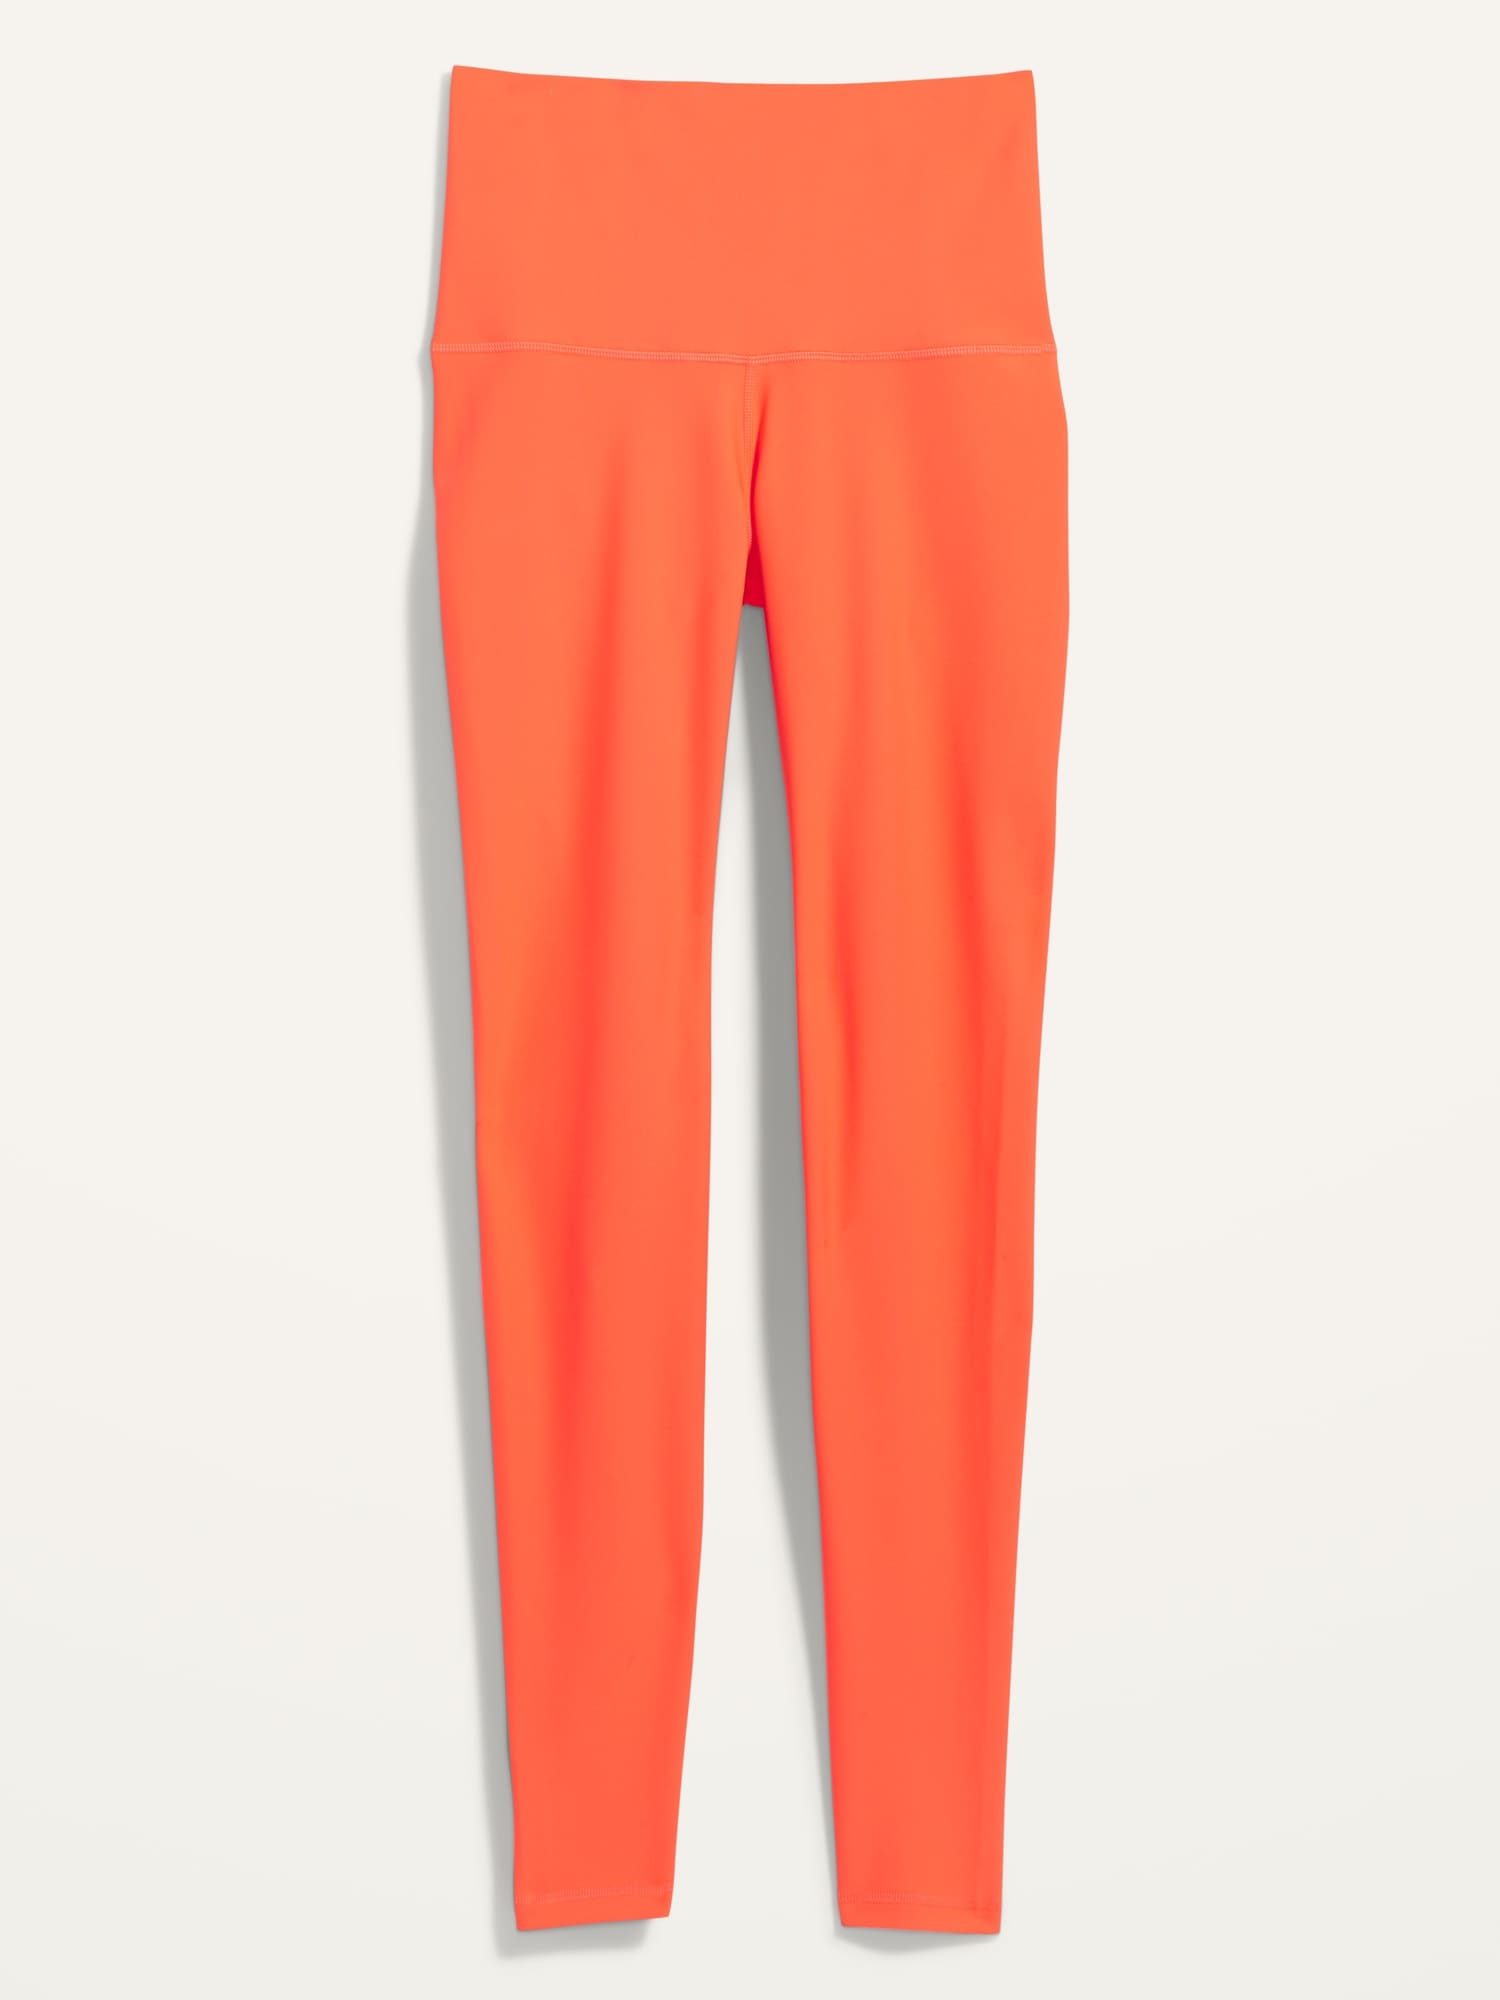 Women's Outrageous Orange Yoga Pants Capri Leggings - High-Quality &  Durable Sportswear — Rarp-ID Fitness